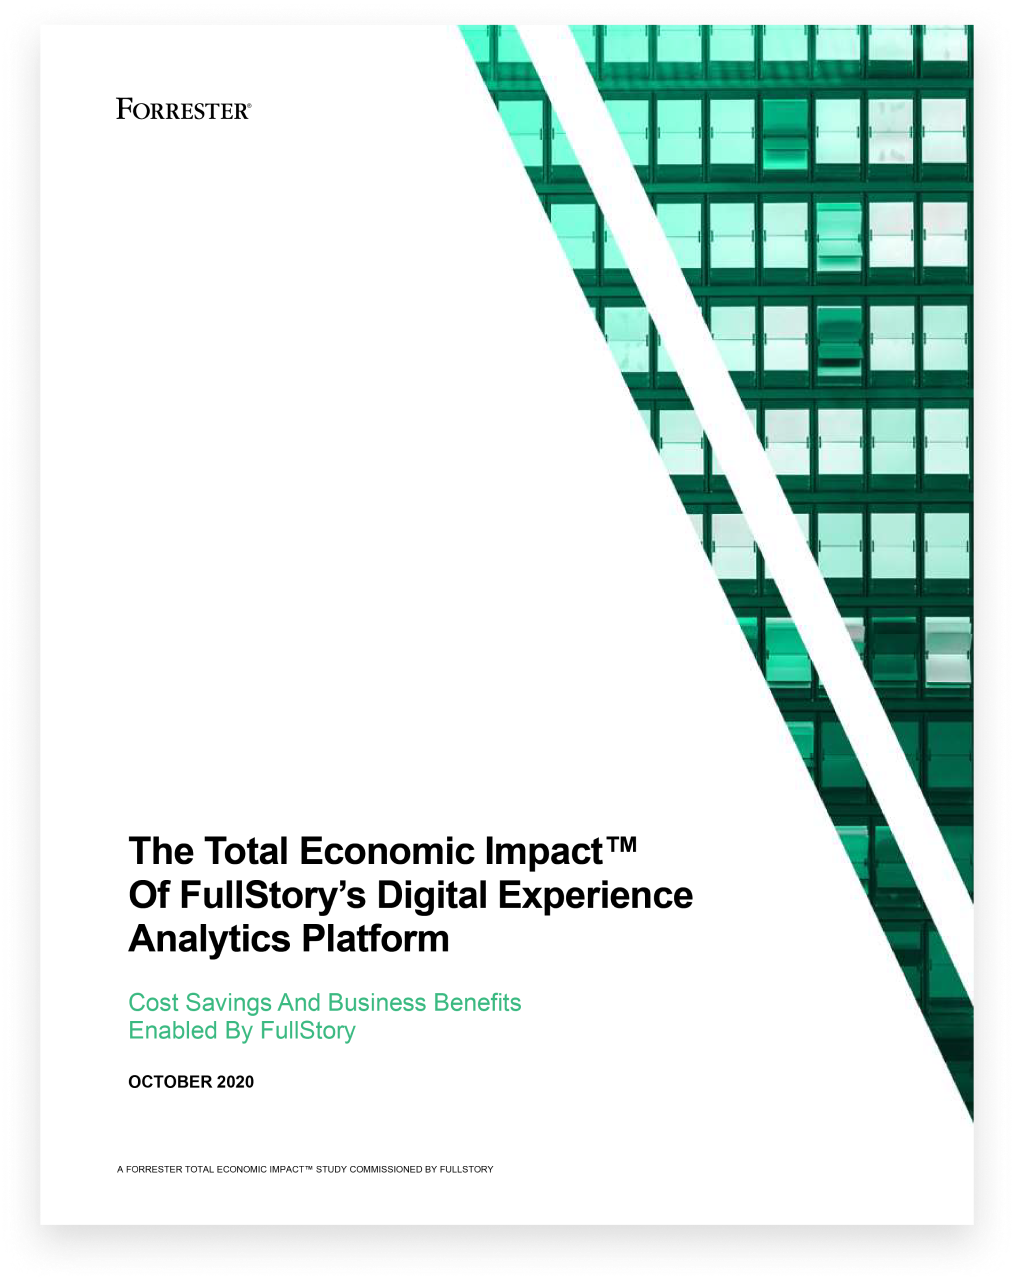 The Total Economic Impact (TEI) of FullStory